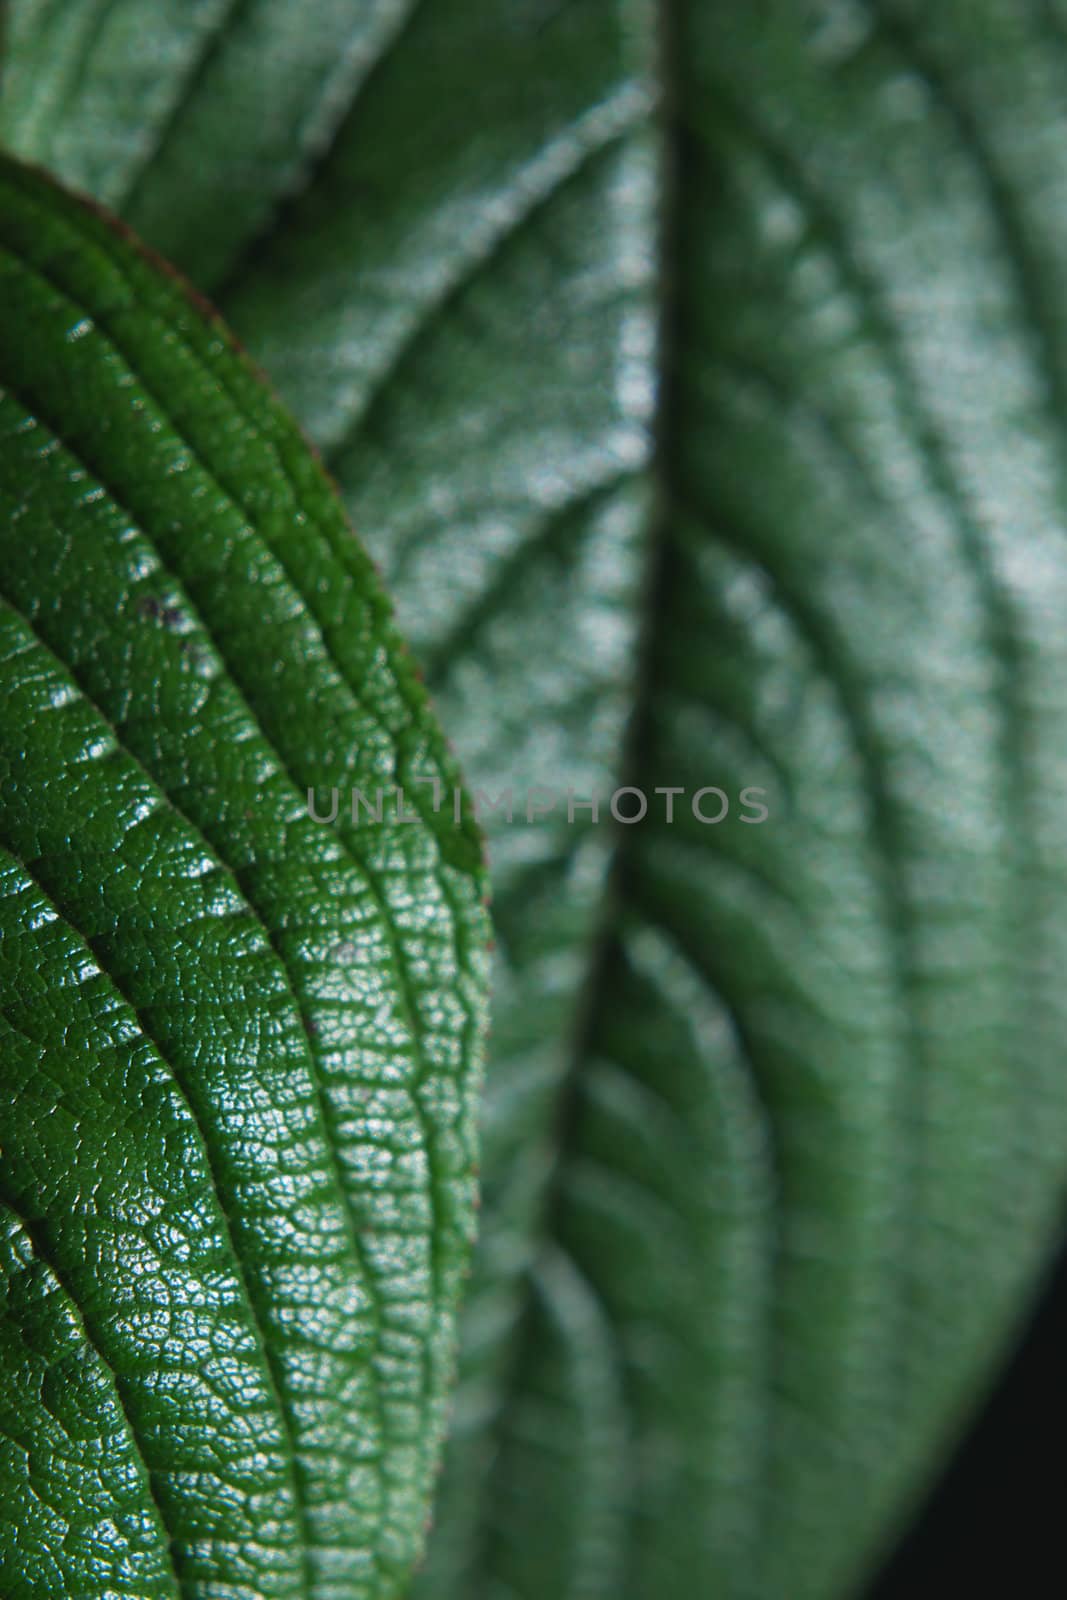 dark leaves background, focus on leaf in foreground